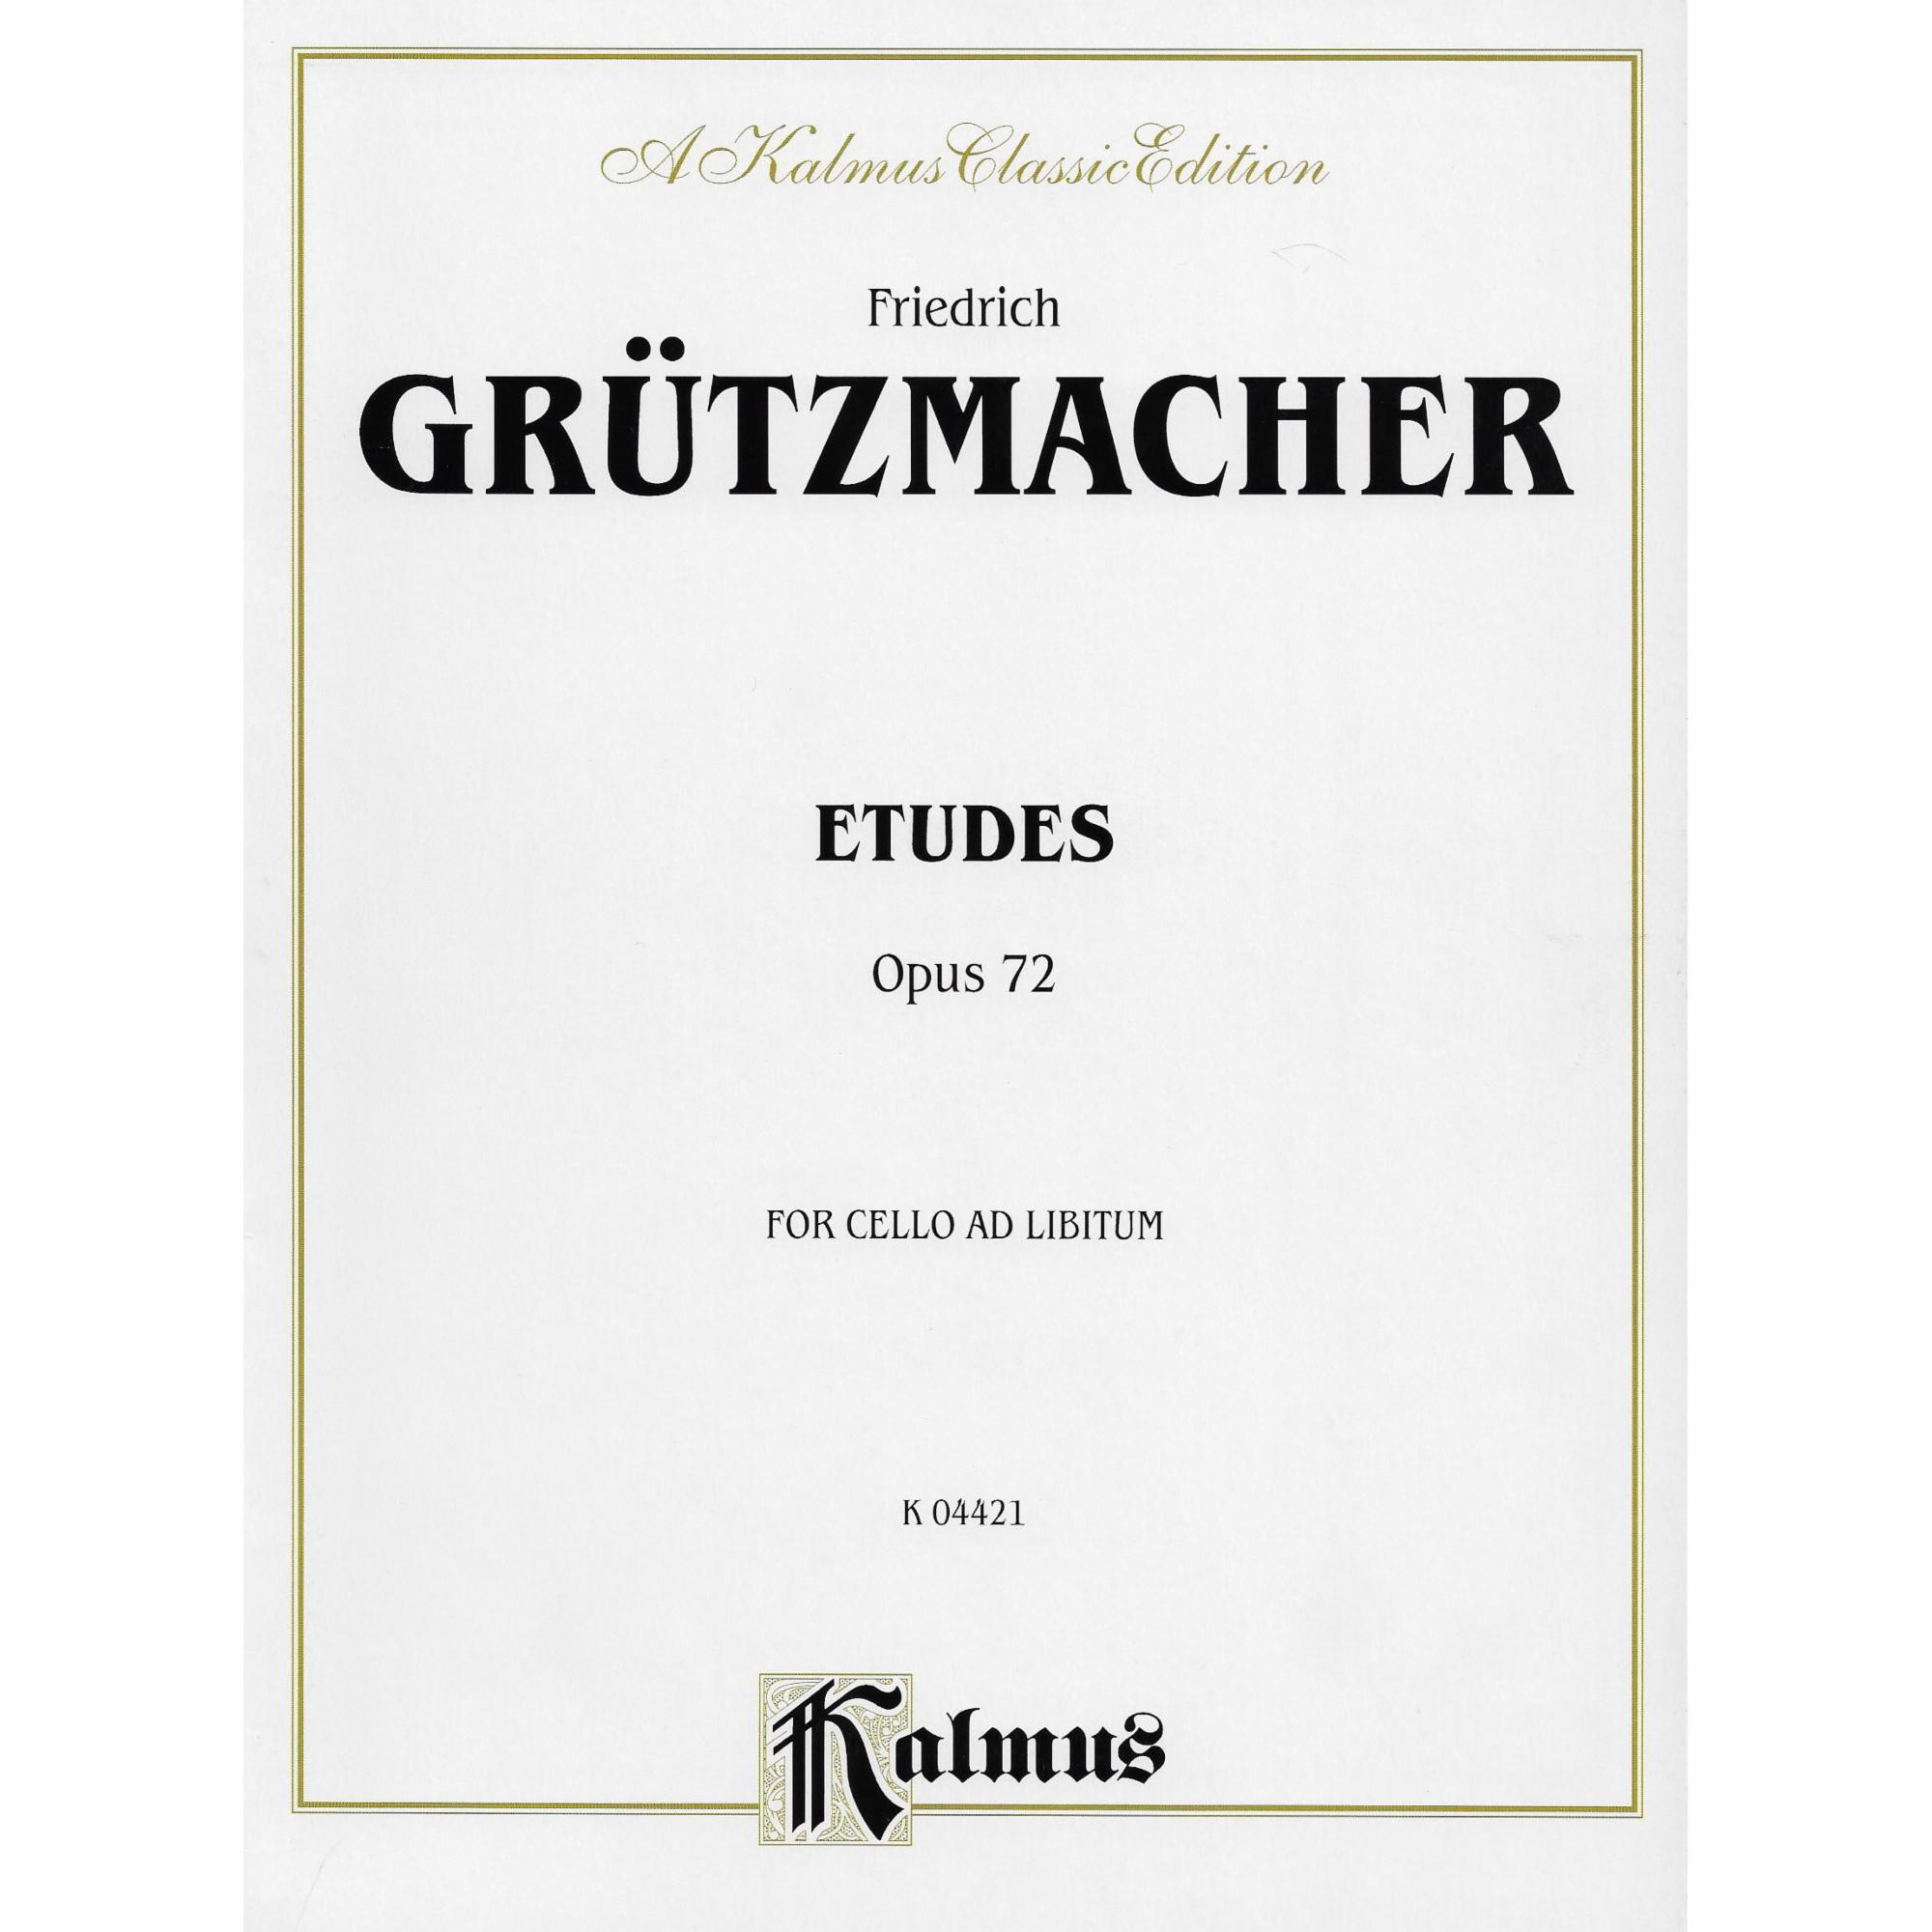 Gruetzmacher -- Etudes, Op. 72 for Two Cellos